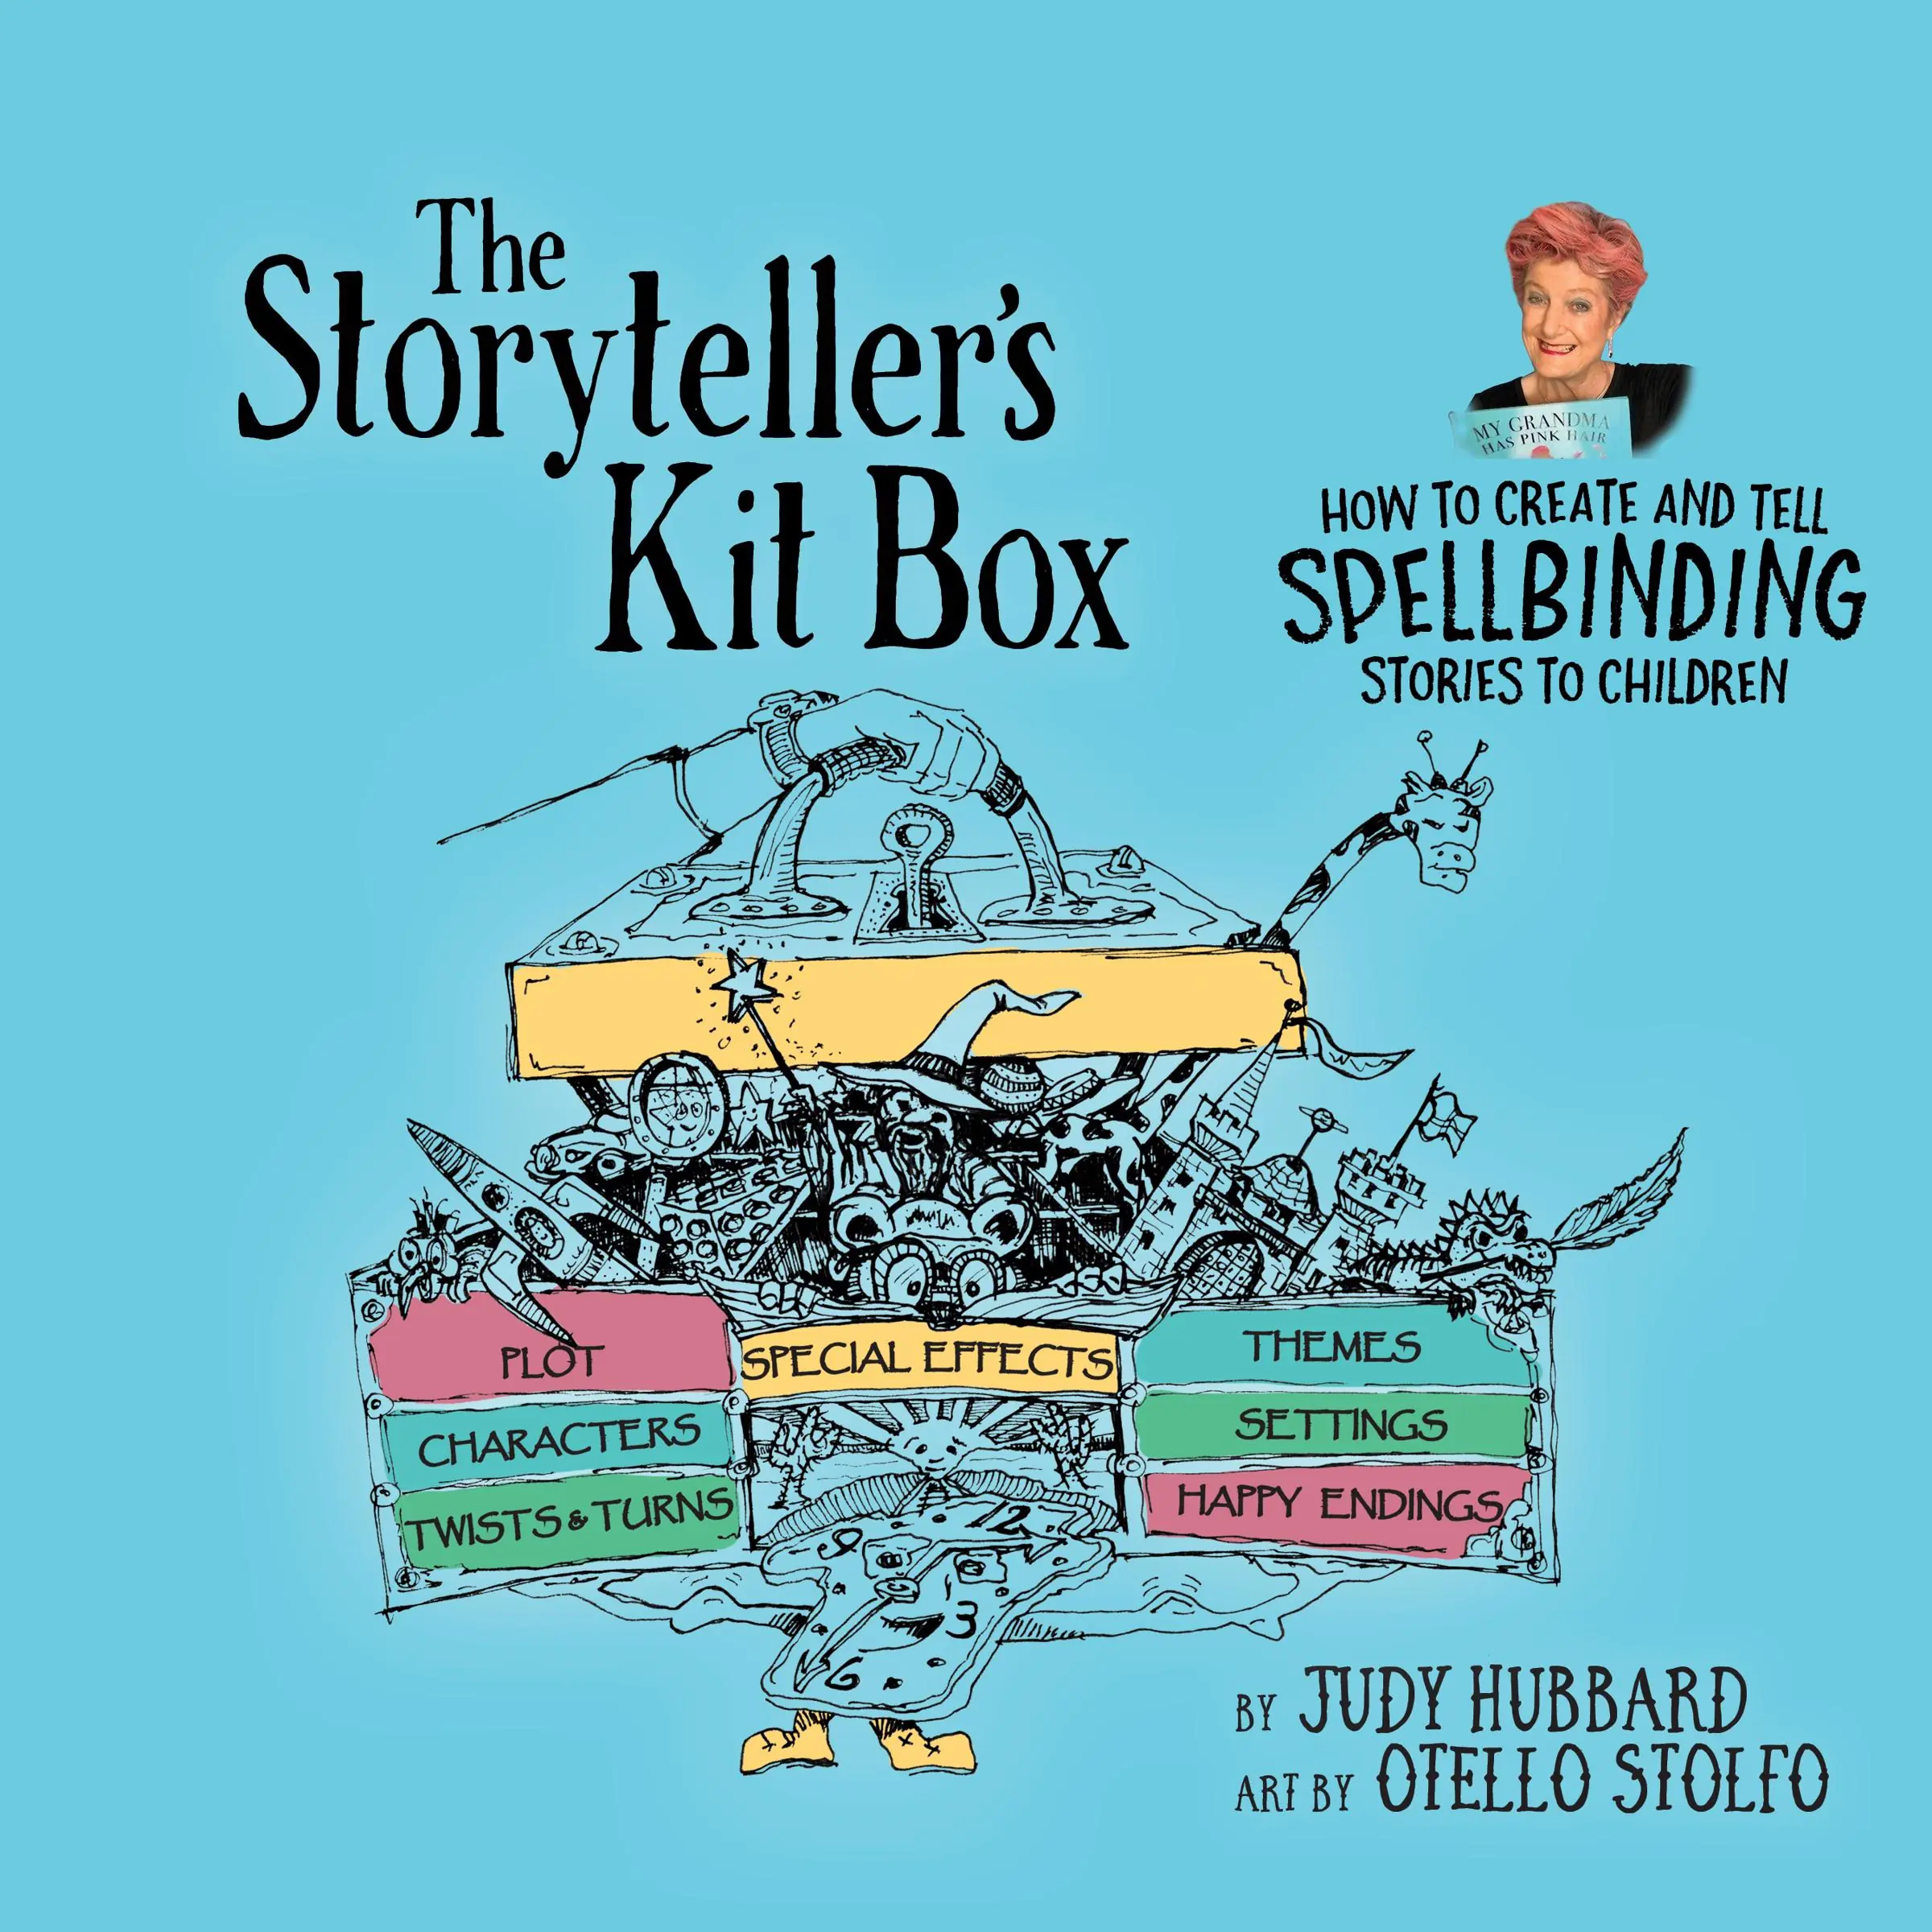 The Storyteller's Kit Box by Judy Hubbard